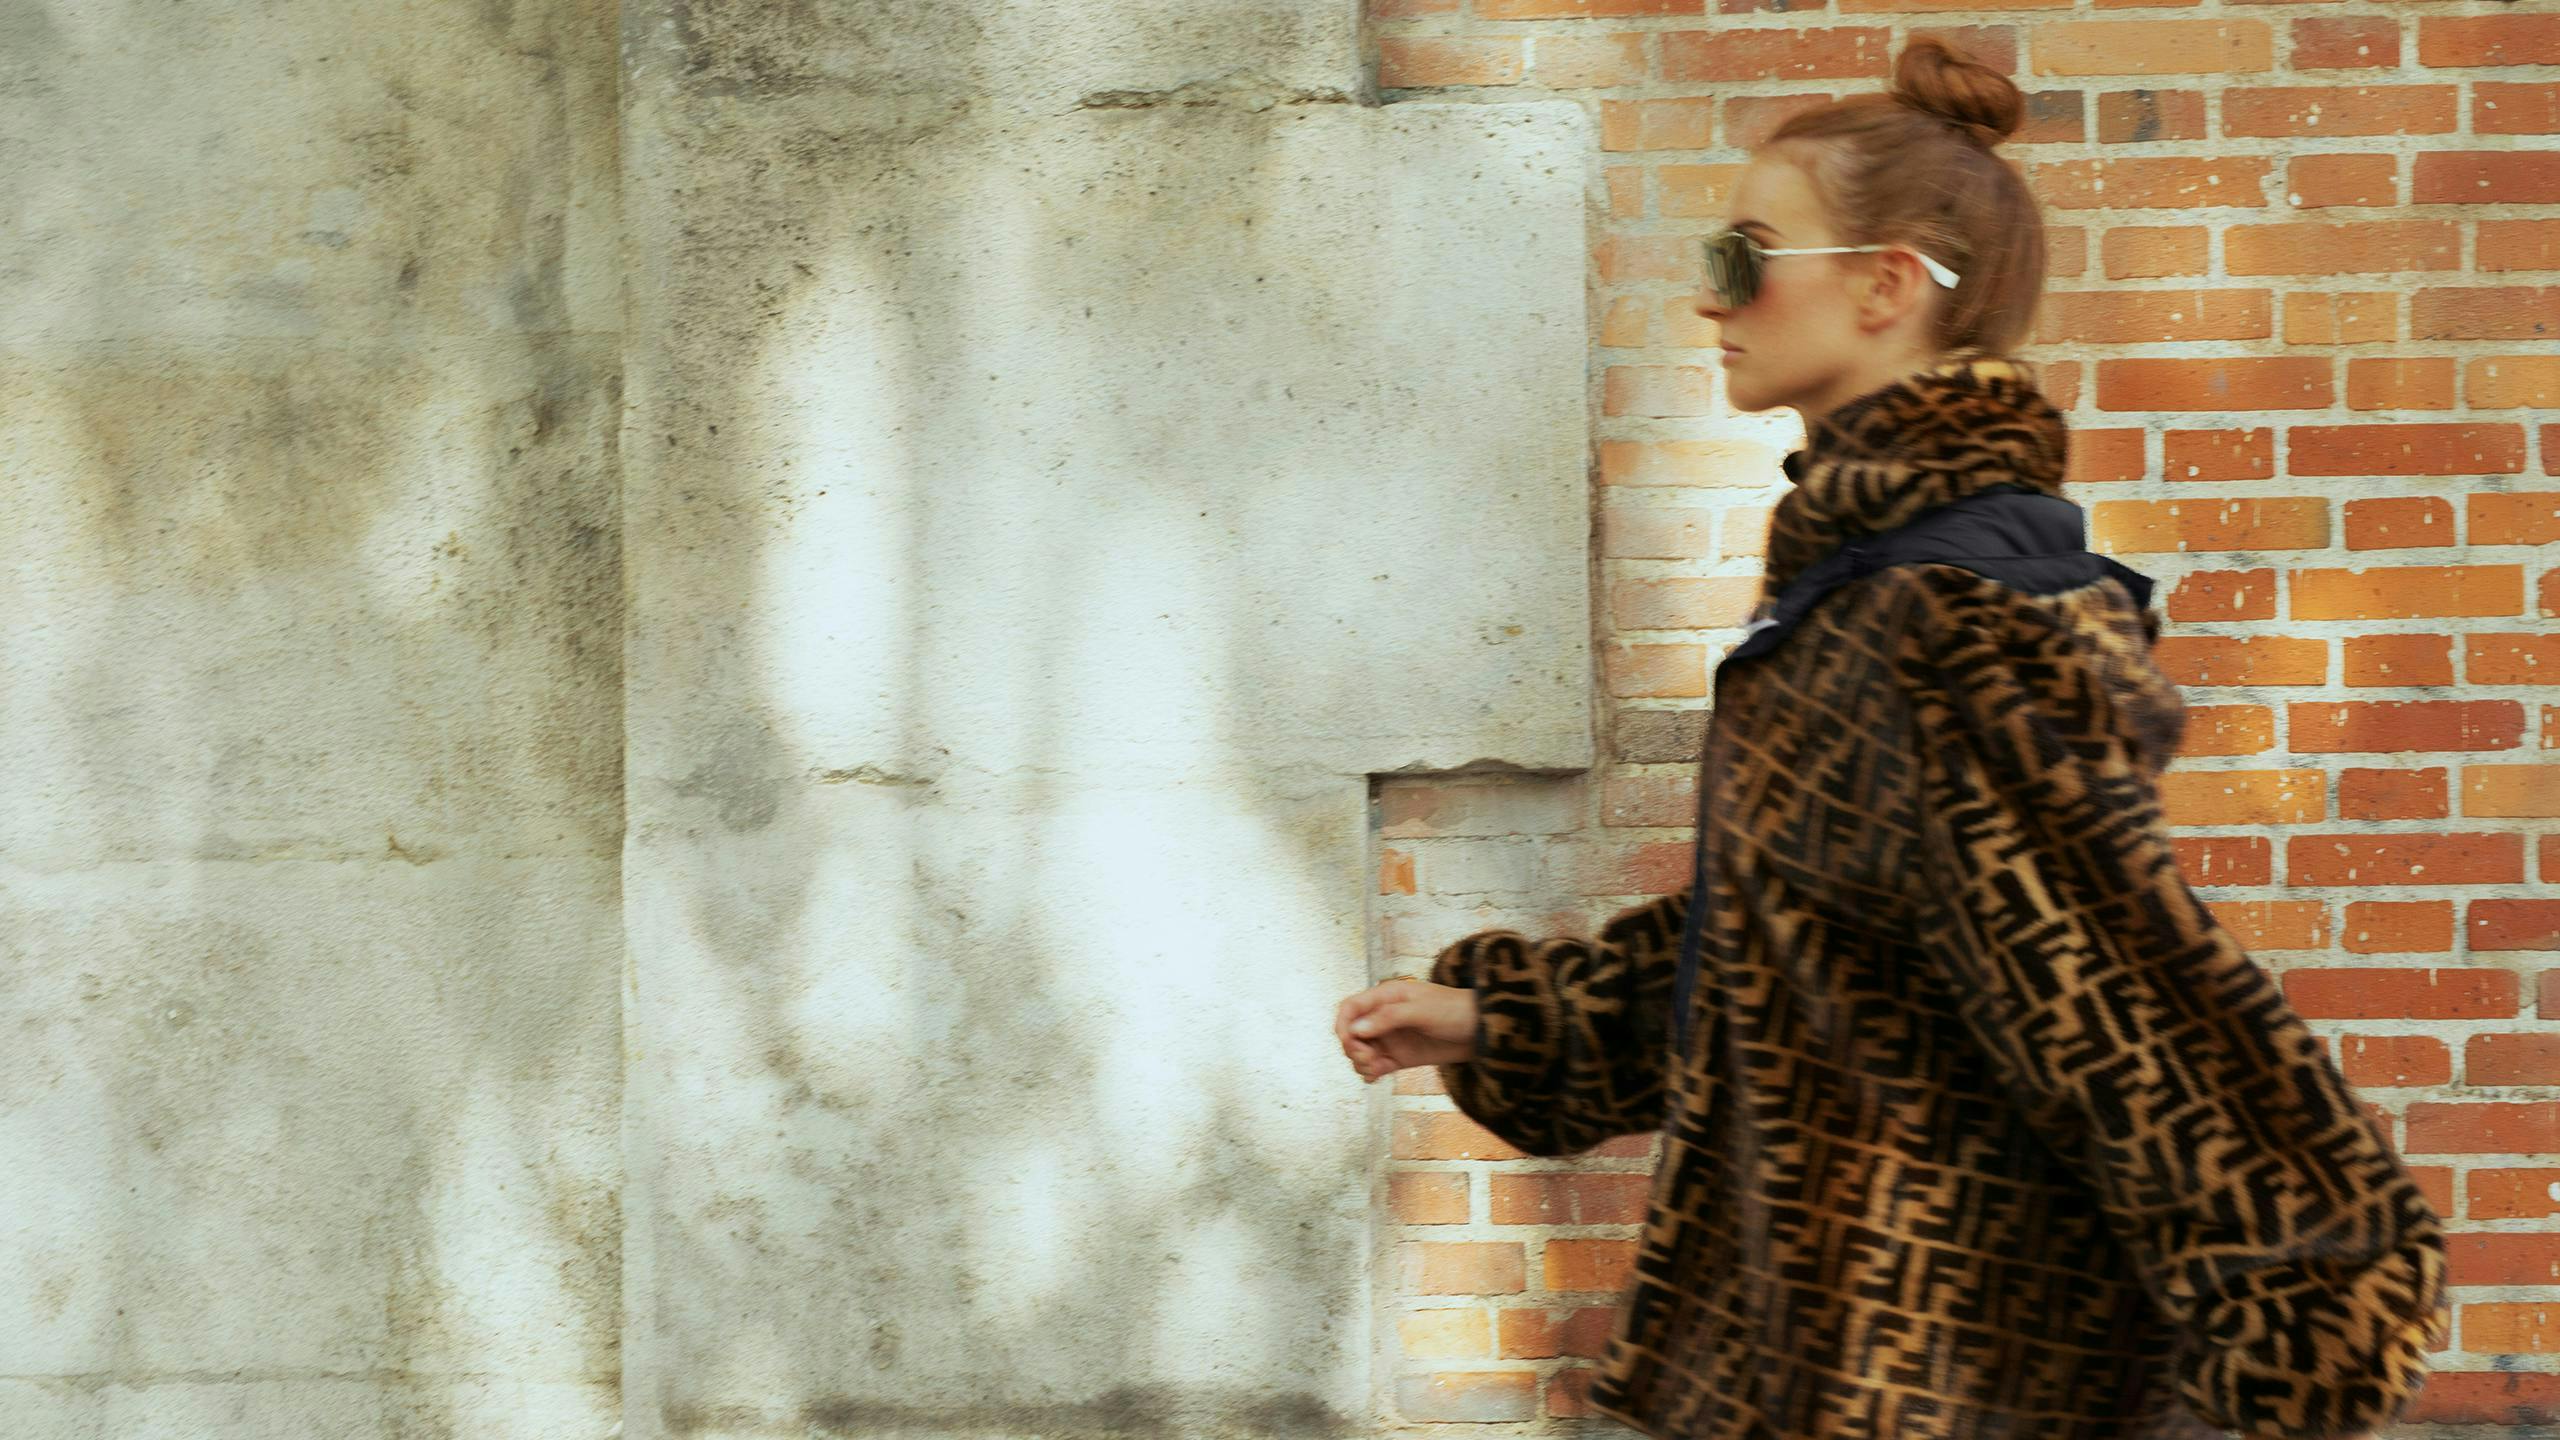 clothing apparel coat overcoat person human wall sleeve brick